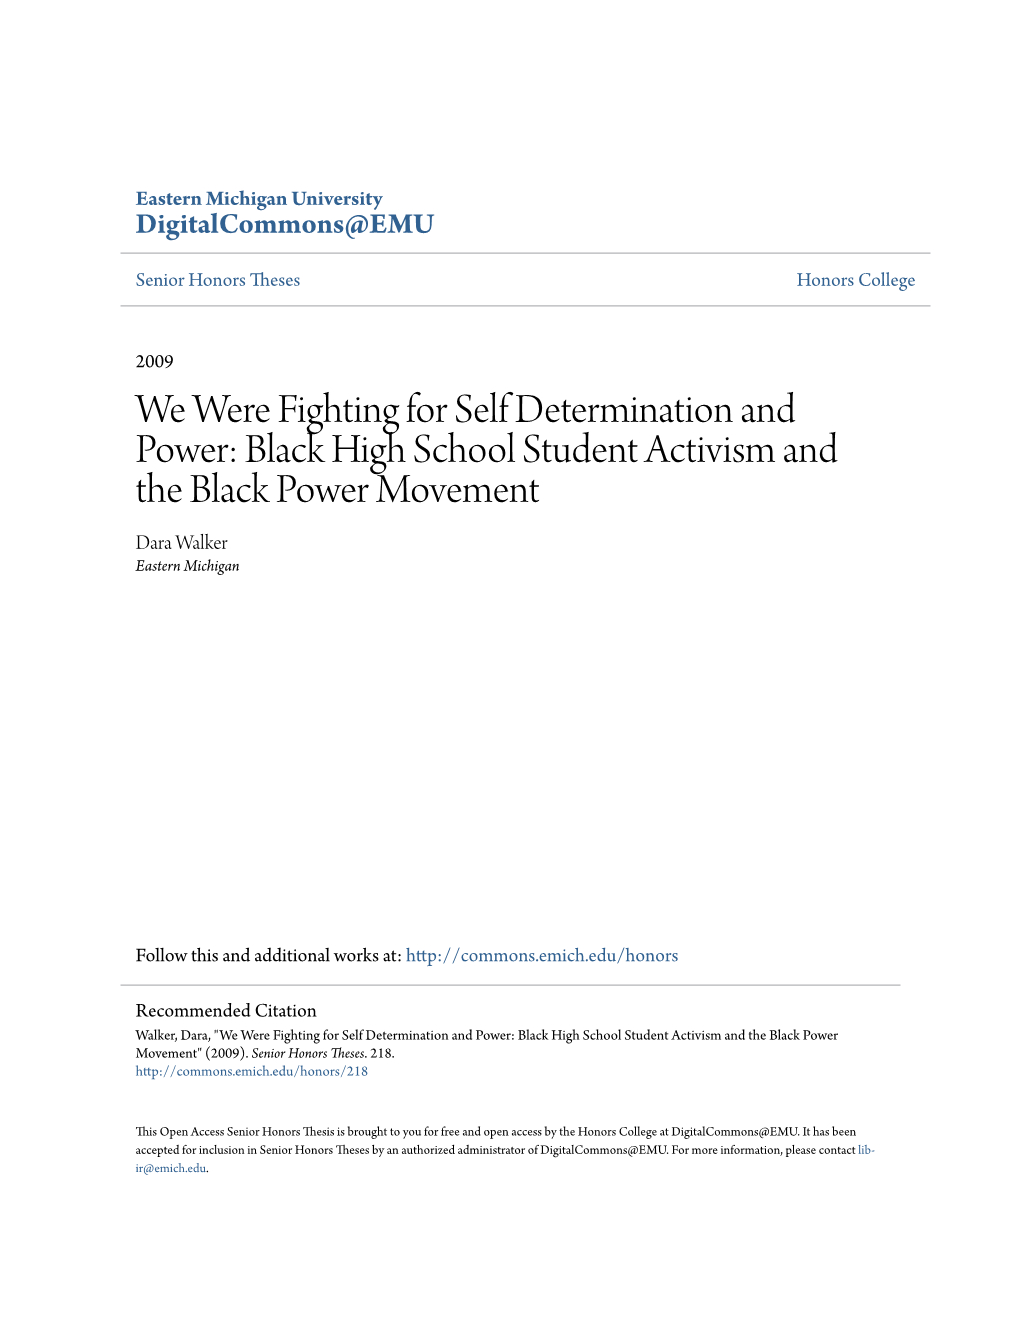 Black High School Student Activism and the Black Power Movement Dara Walker Eastern Michigan